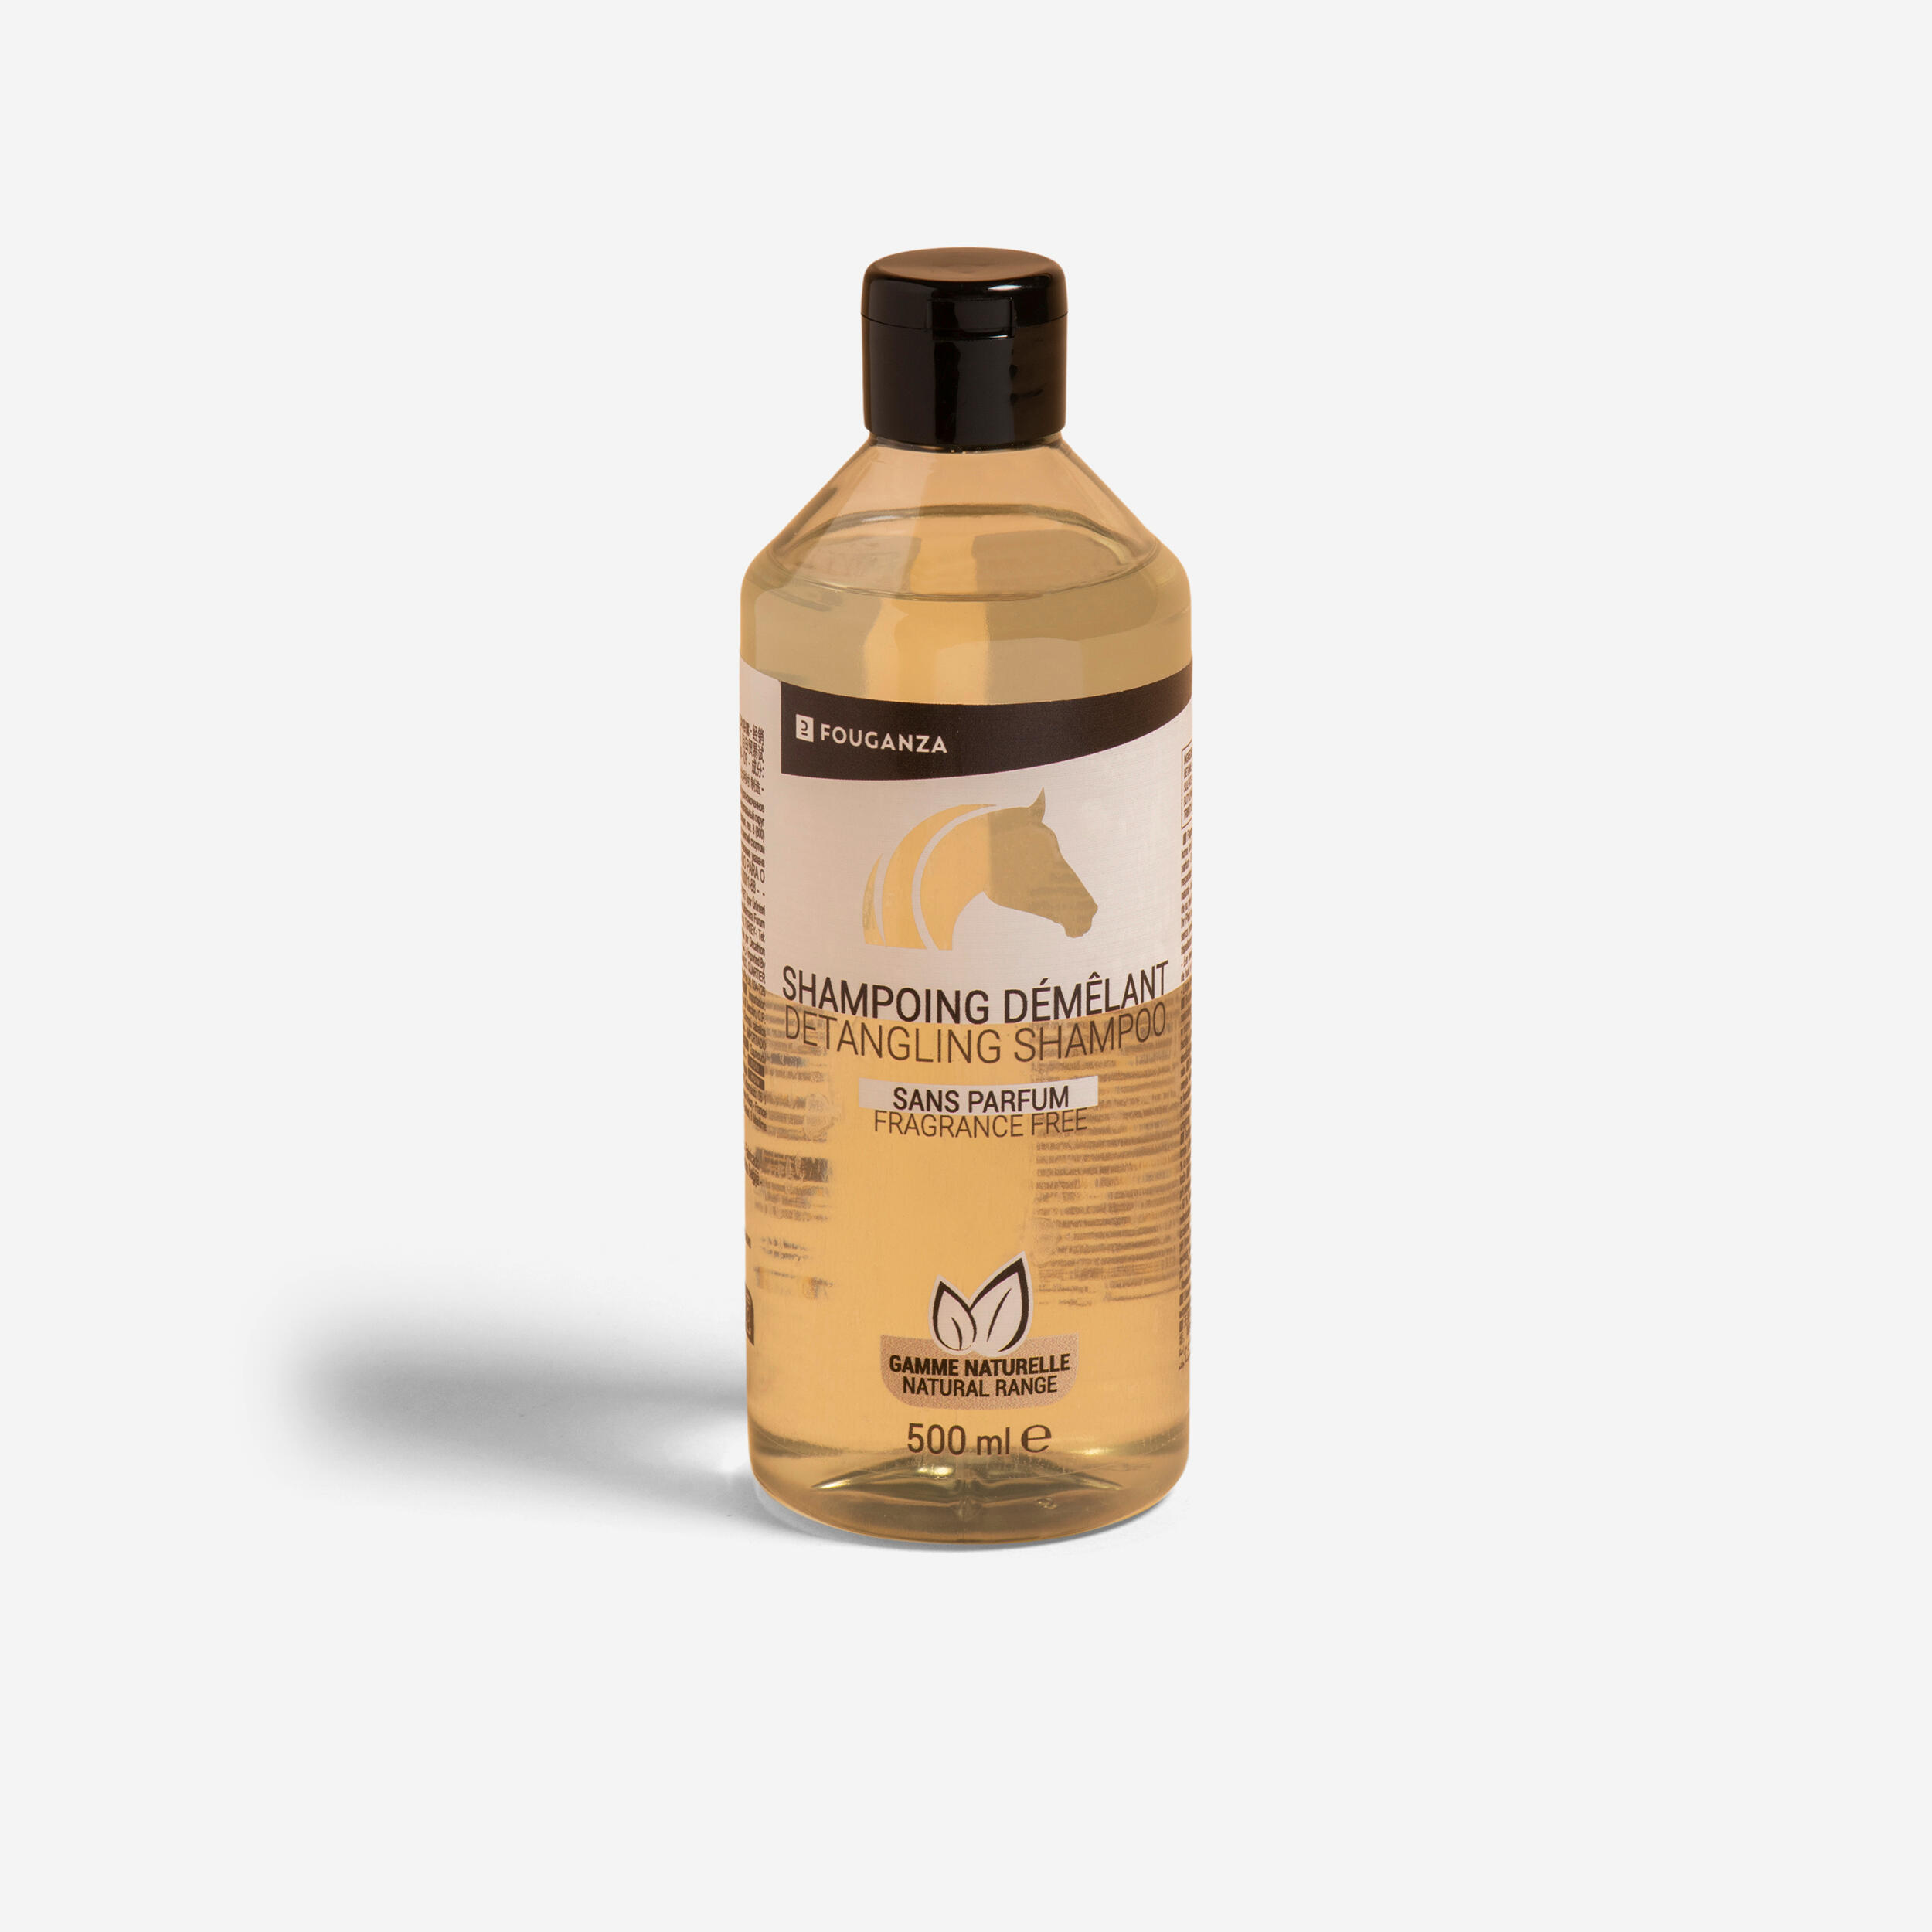 Fouganza Horse Riding Detangling Shampoo For & Pony 500ml - Fragrance-free